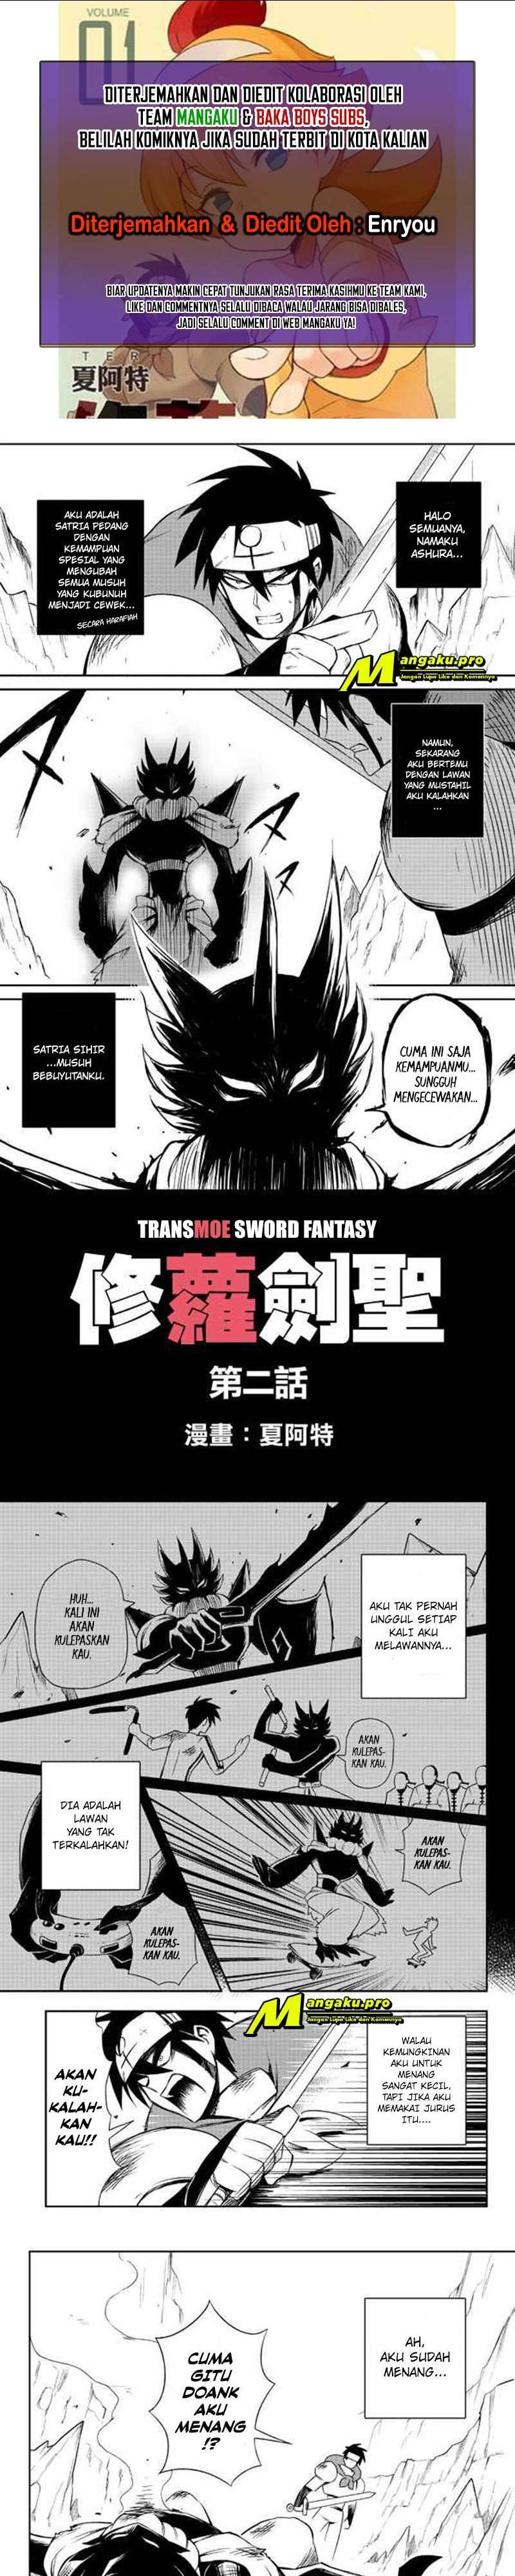 Transmoe Sword Fantasy Chapter 2